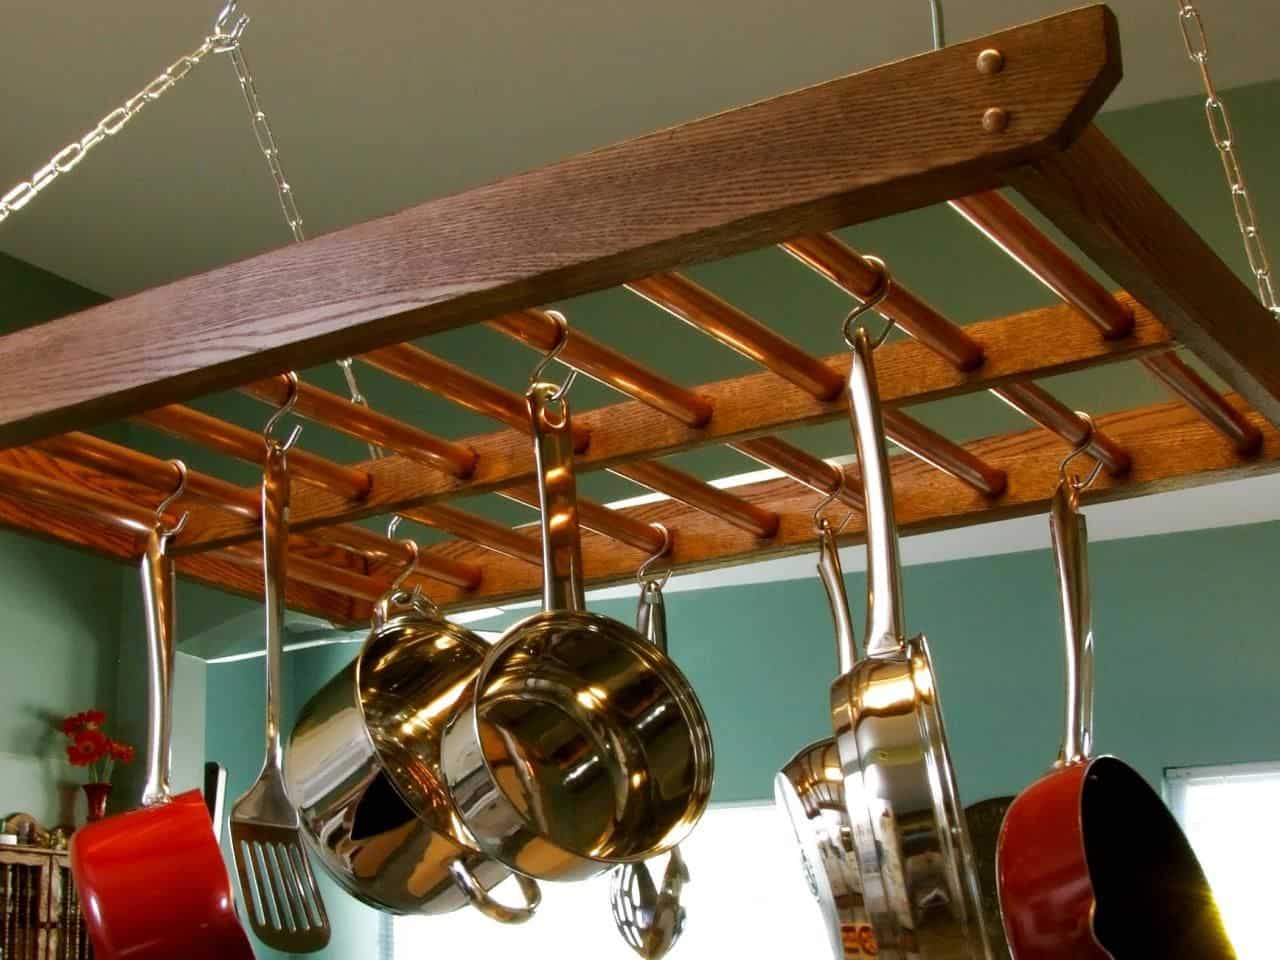 DIY Hanging Pot Rack